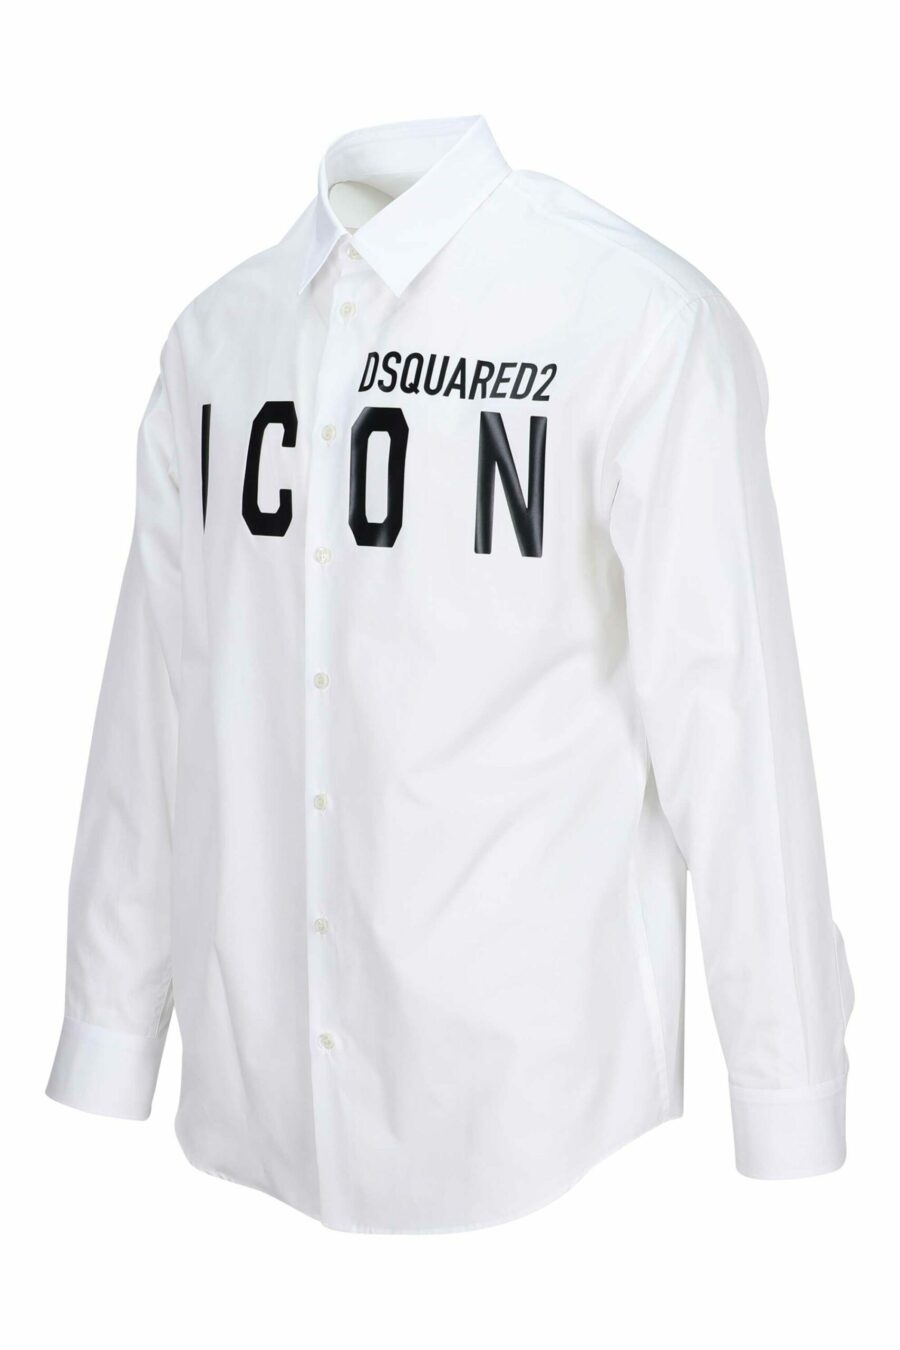 White shirt with maxilogo "icon" - 8052134107577 3 scaled